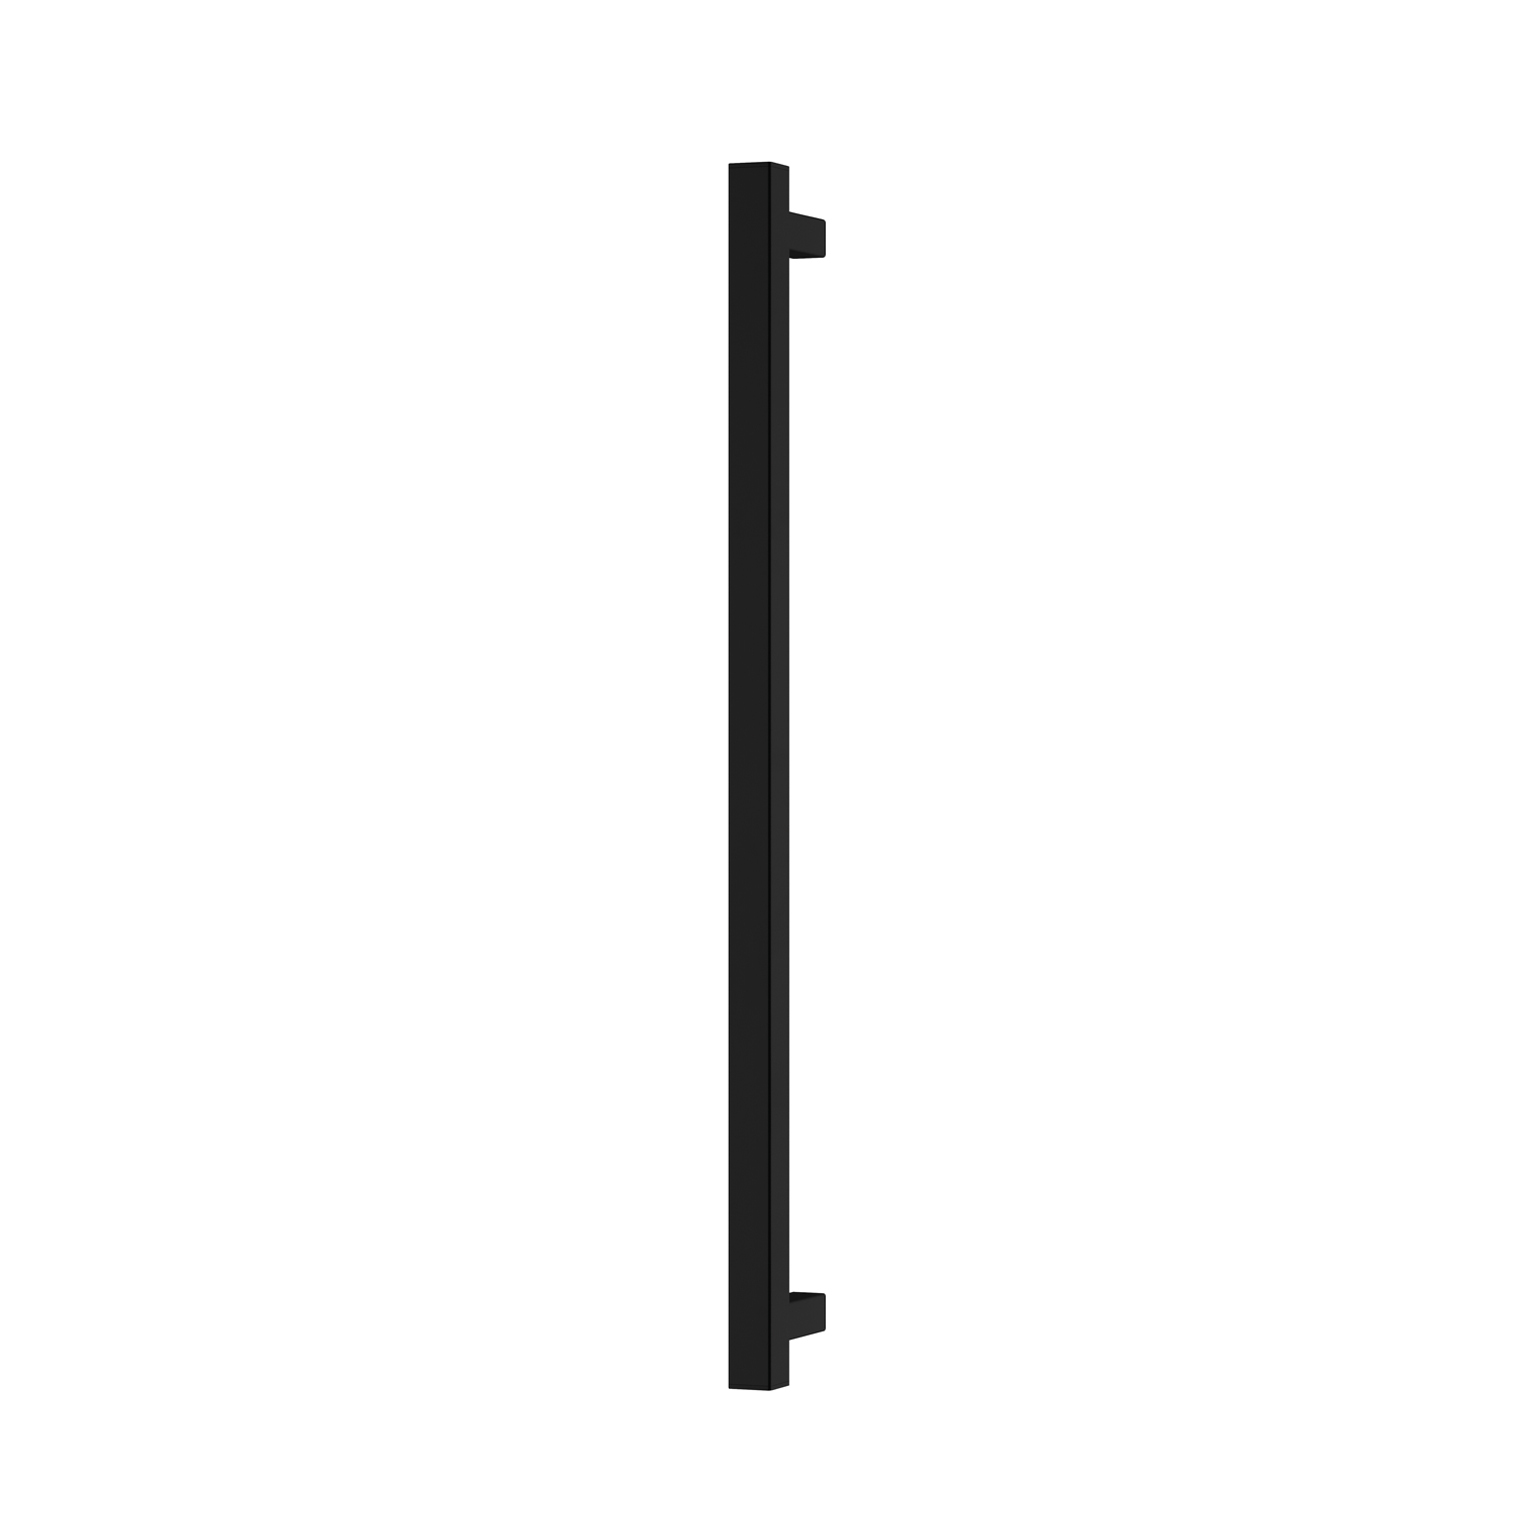 Phoenix Tapware Heated Towel Rail Square Bar 800mm Matte Black 651-8761-10